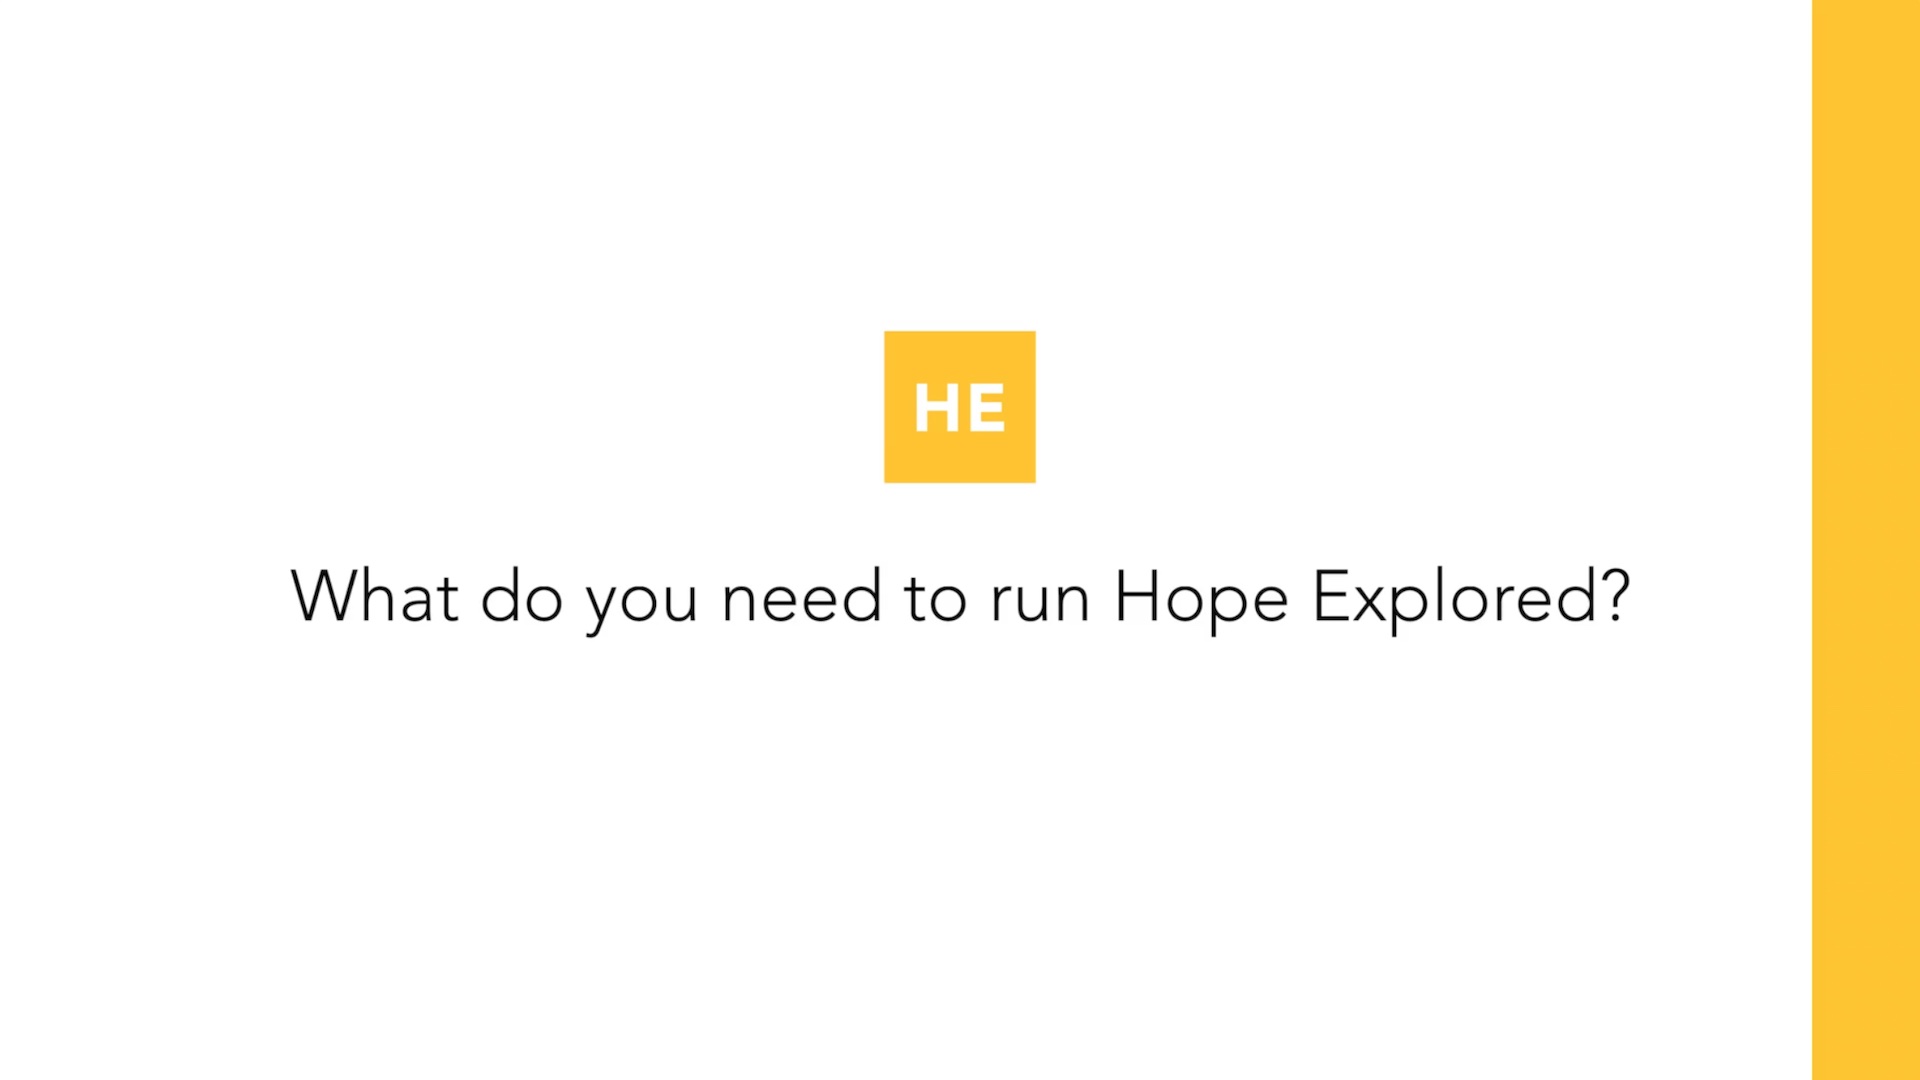 What do you need to run Hope Explored?